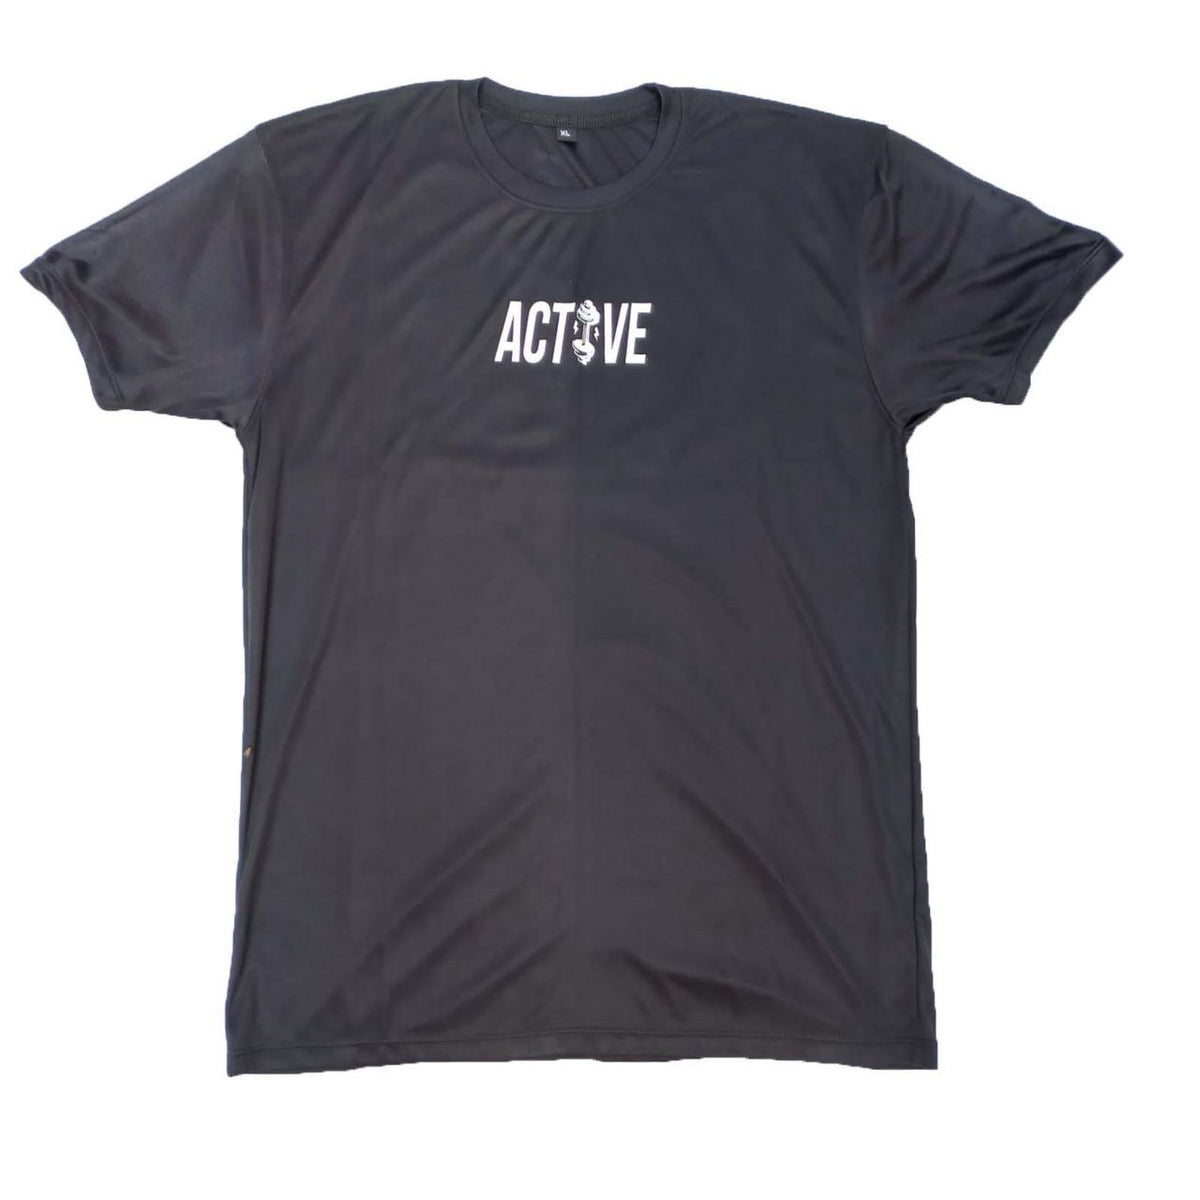 Active Black Crew Neck t-shirt